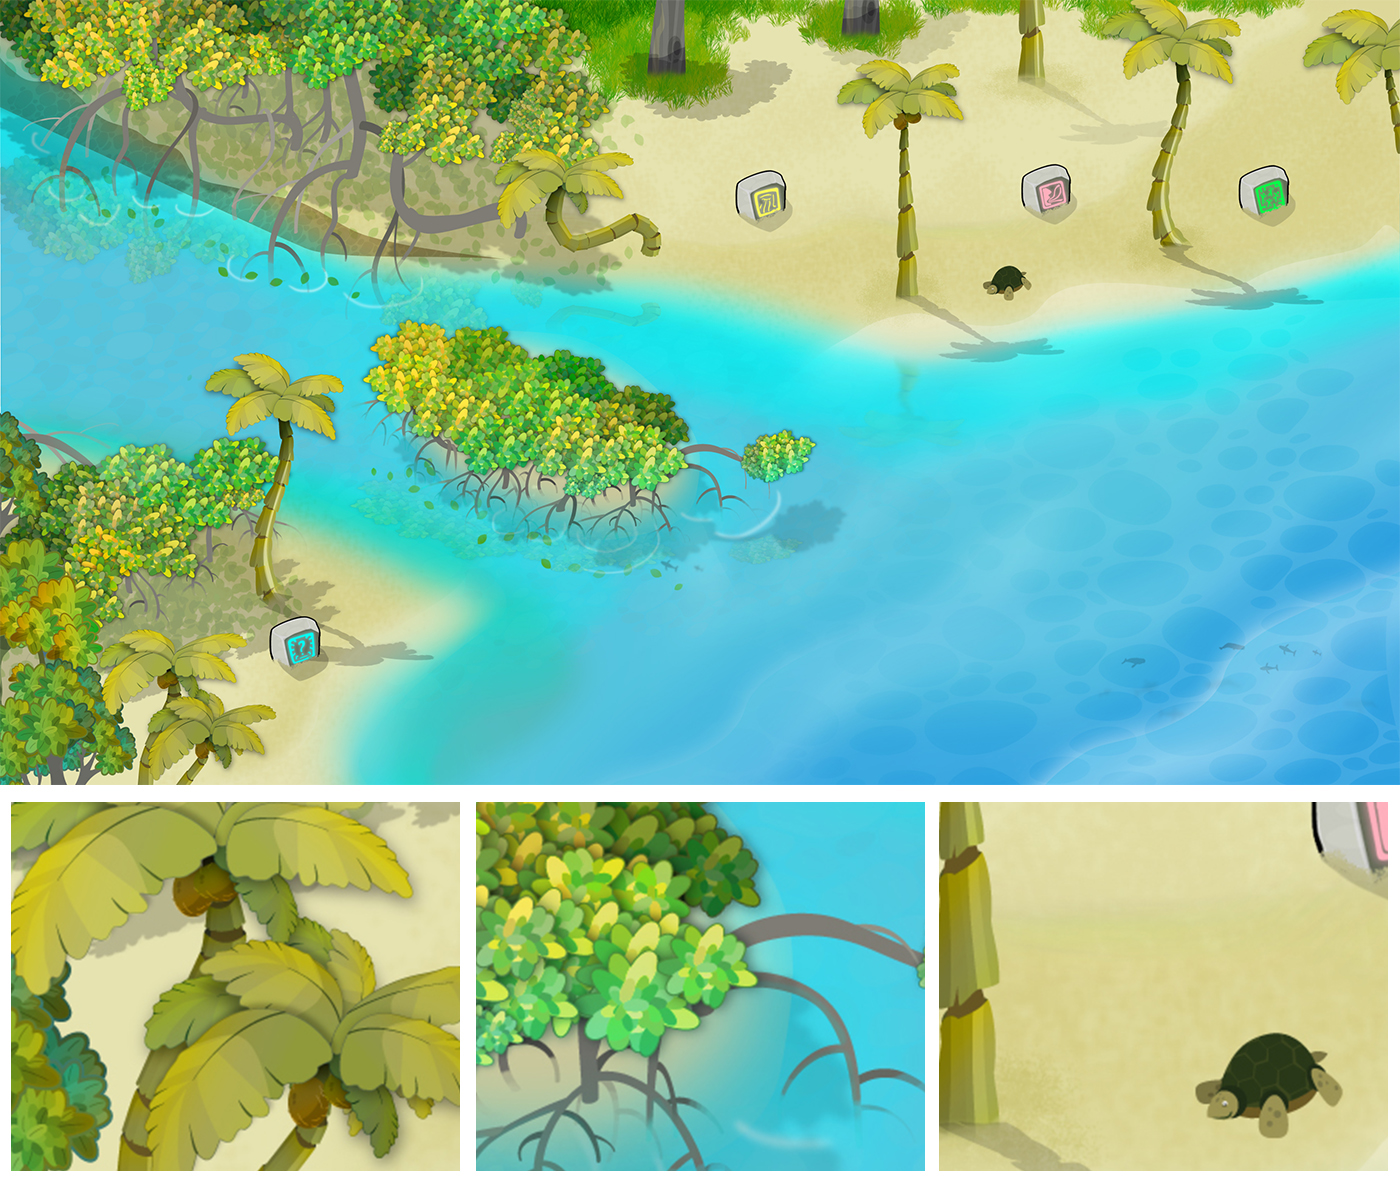 backgrounds Videogames Edugame water Mascot background Education environment river desert paramo sea assets Game Art Game Dev